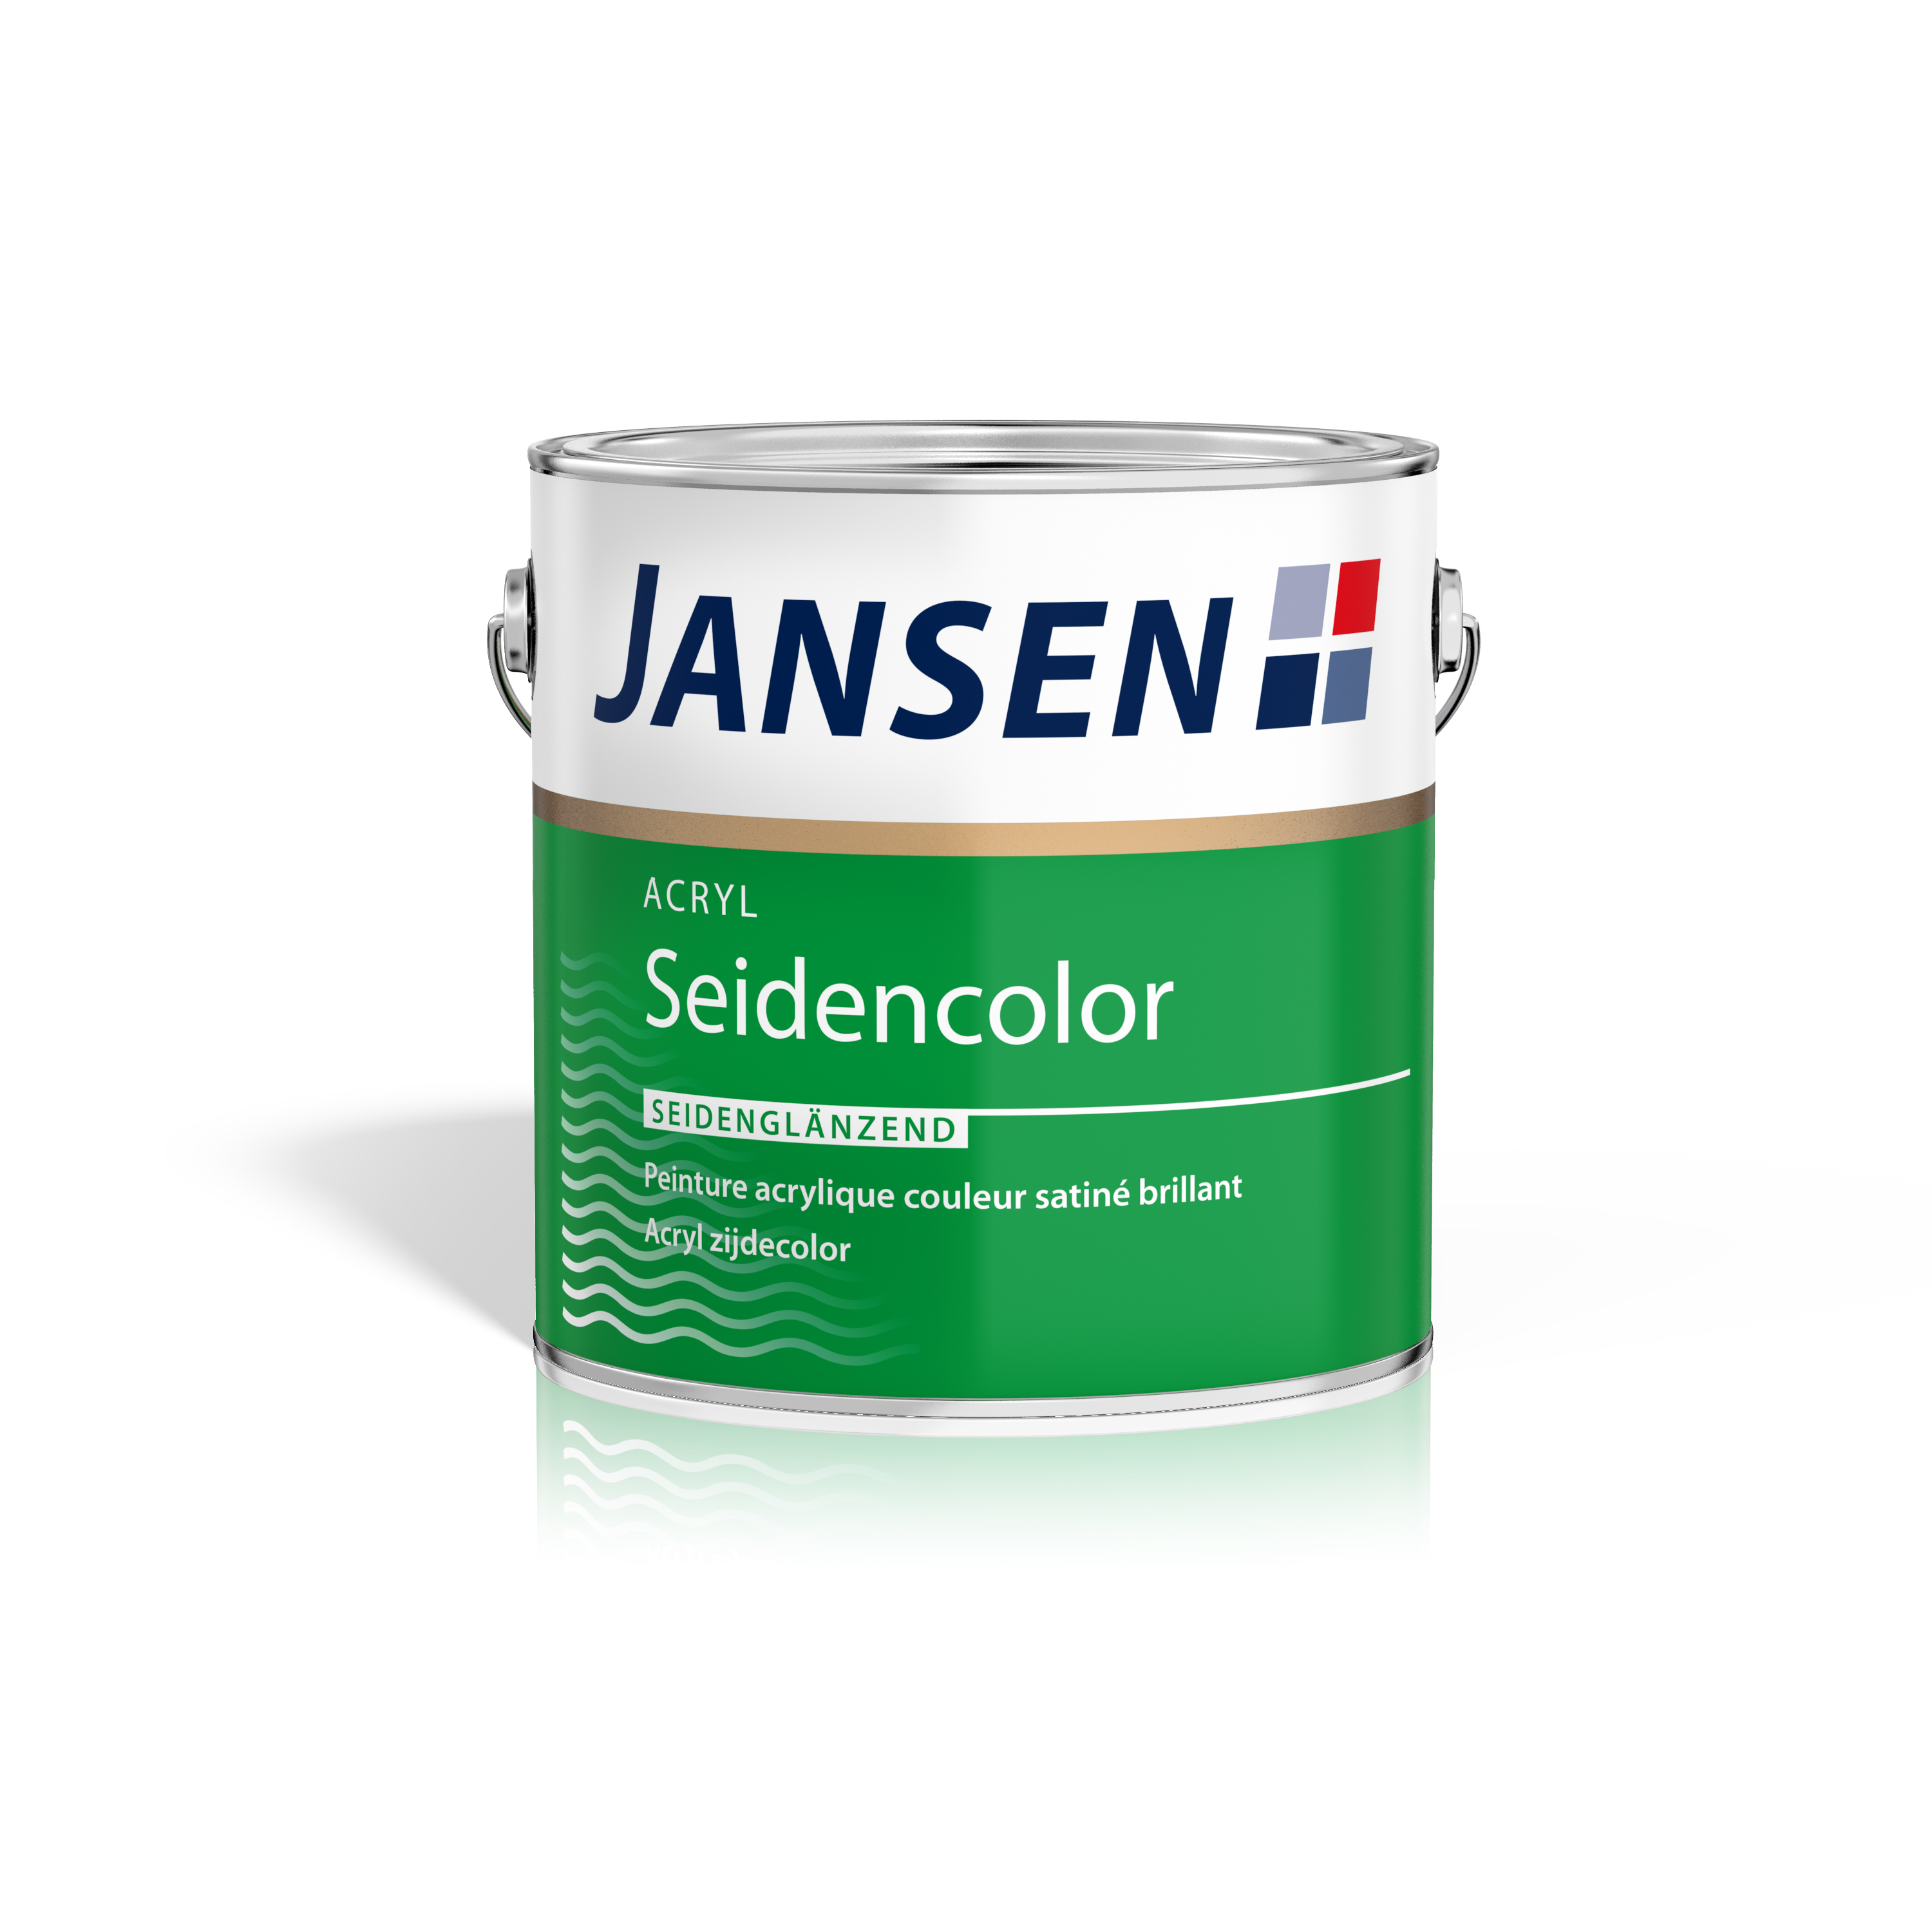 Jansen Acryl Seidencolor